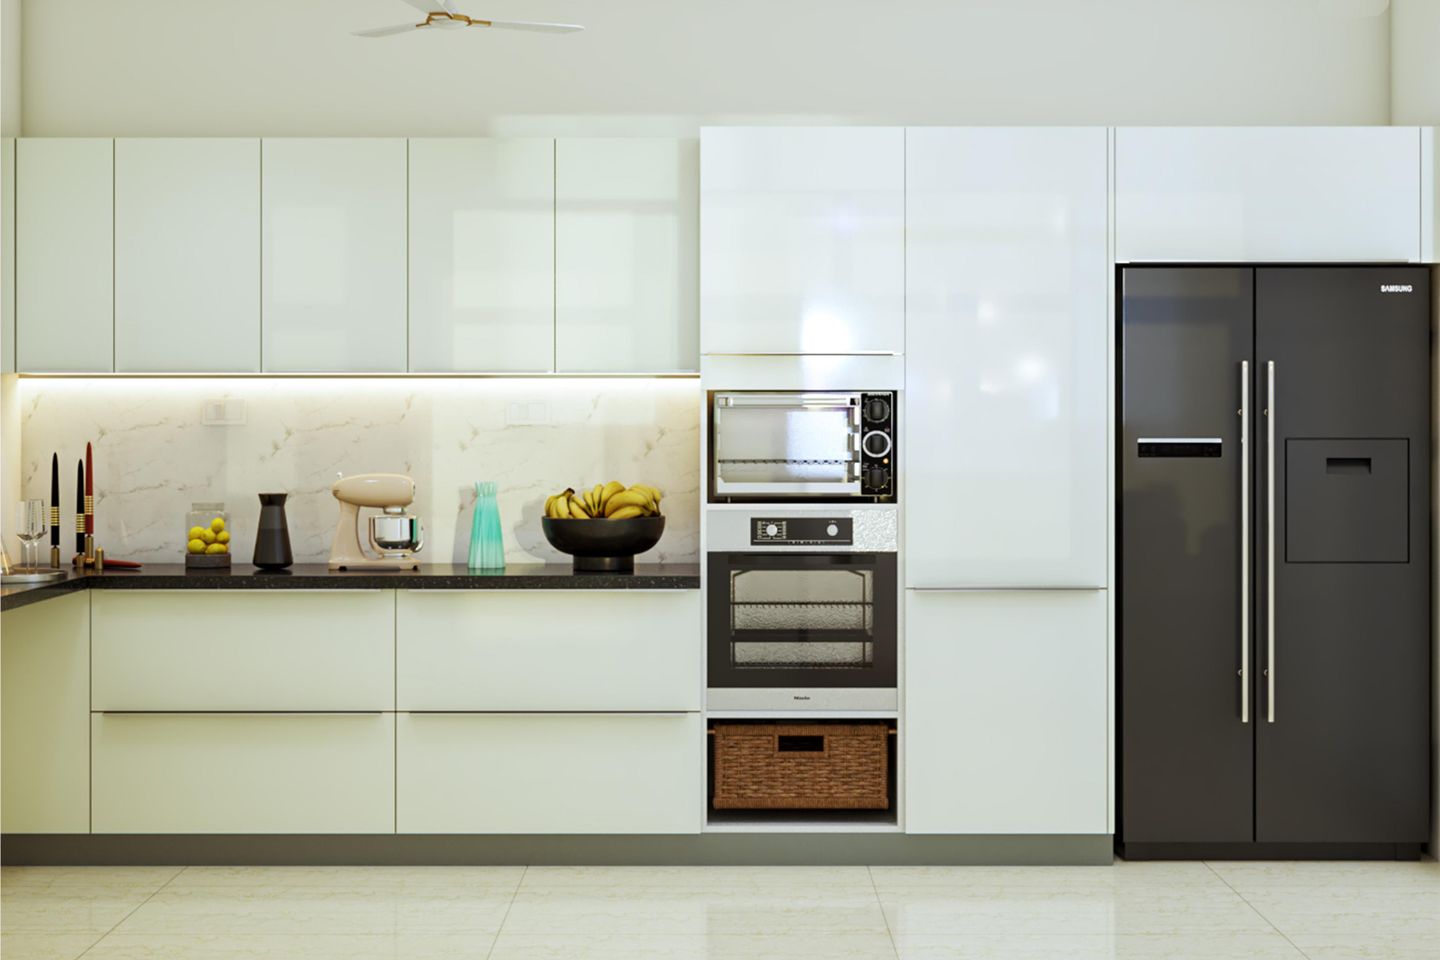 Contemporary Modular Kitchen Design With Under Cabinet Lighting